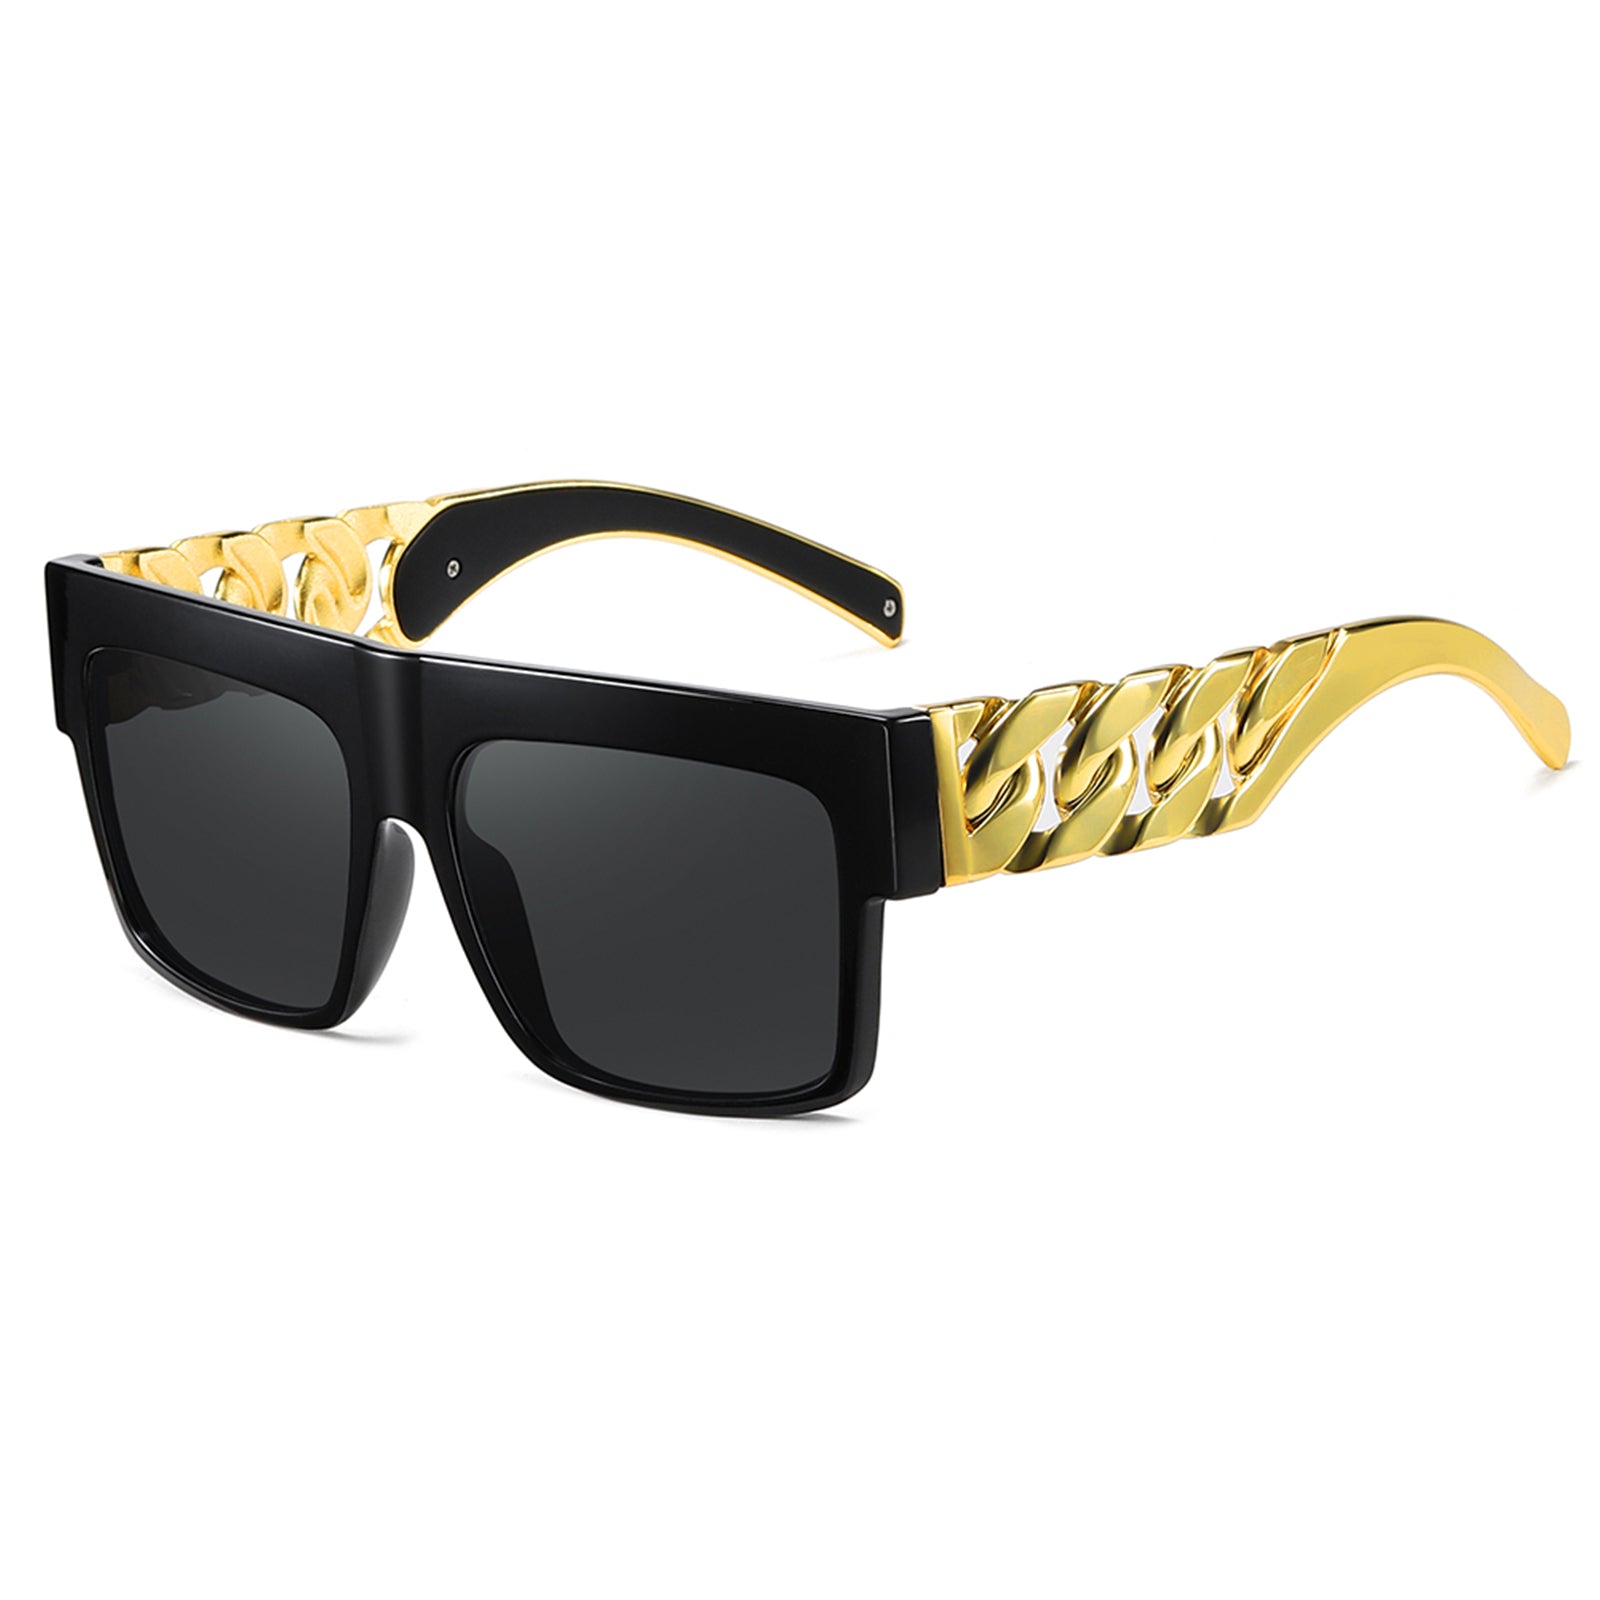 Sheen Kelly Retro Square Thick Sunglasses Women Men Fashion Oversized Hip Pop Black Shades Luxury Gold Metal Eyewear